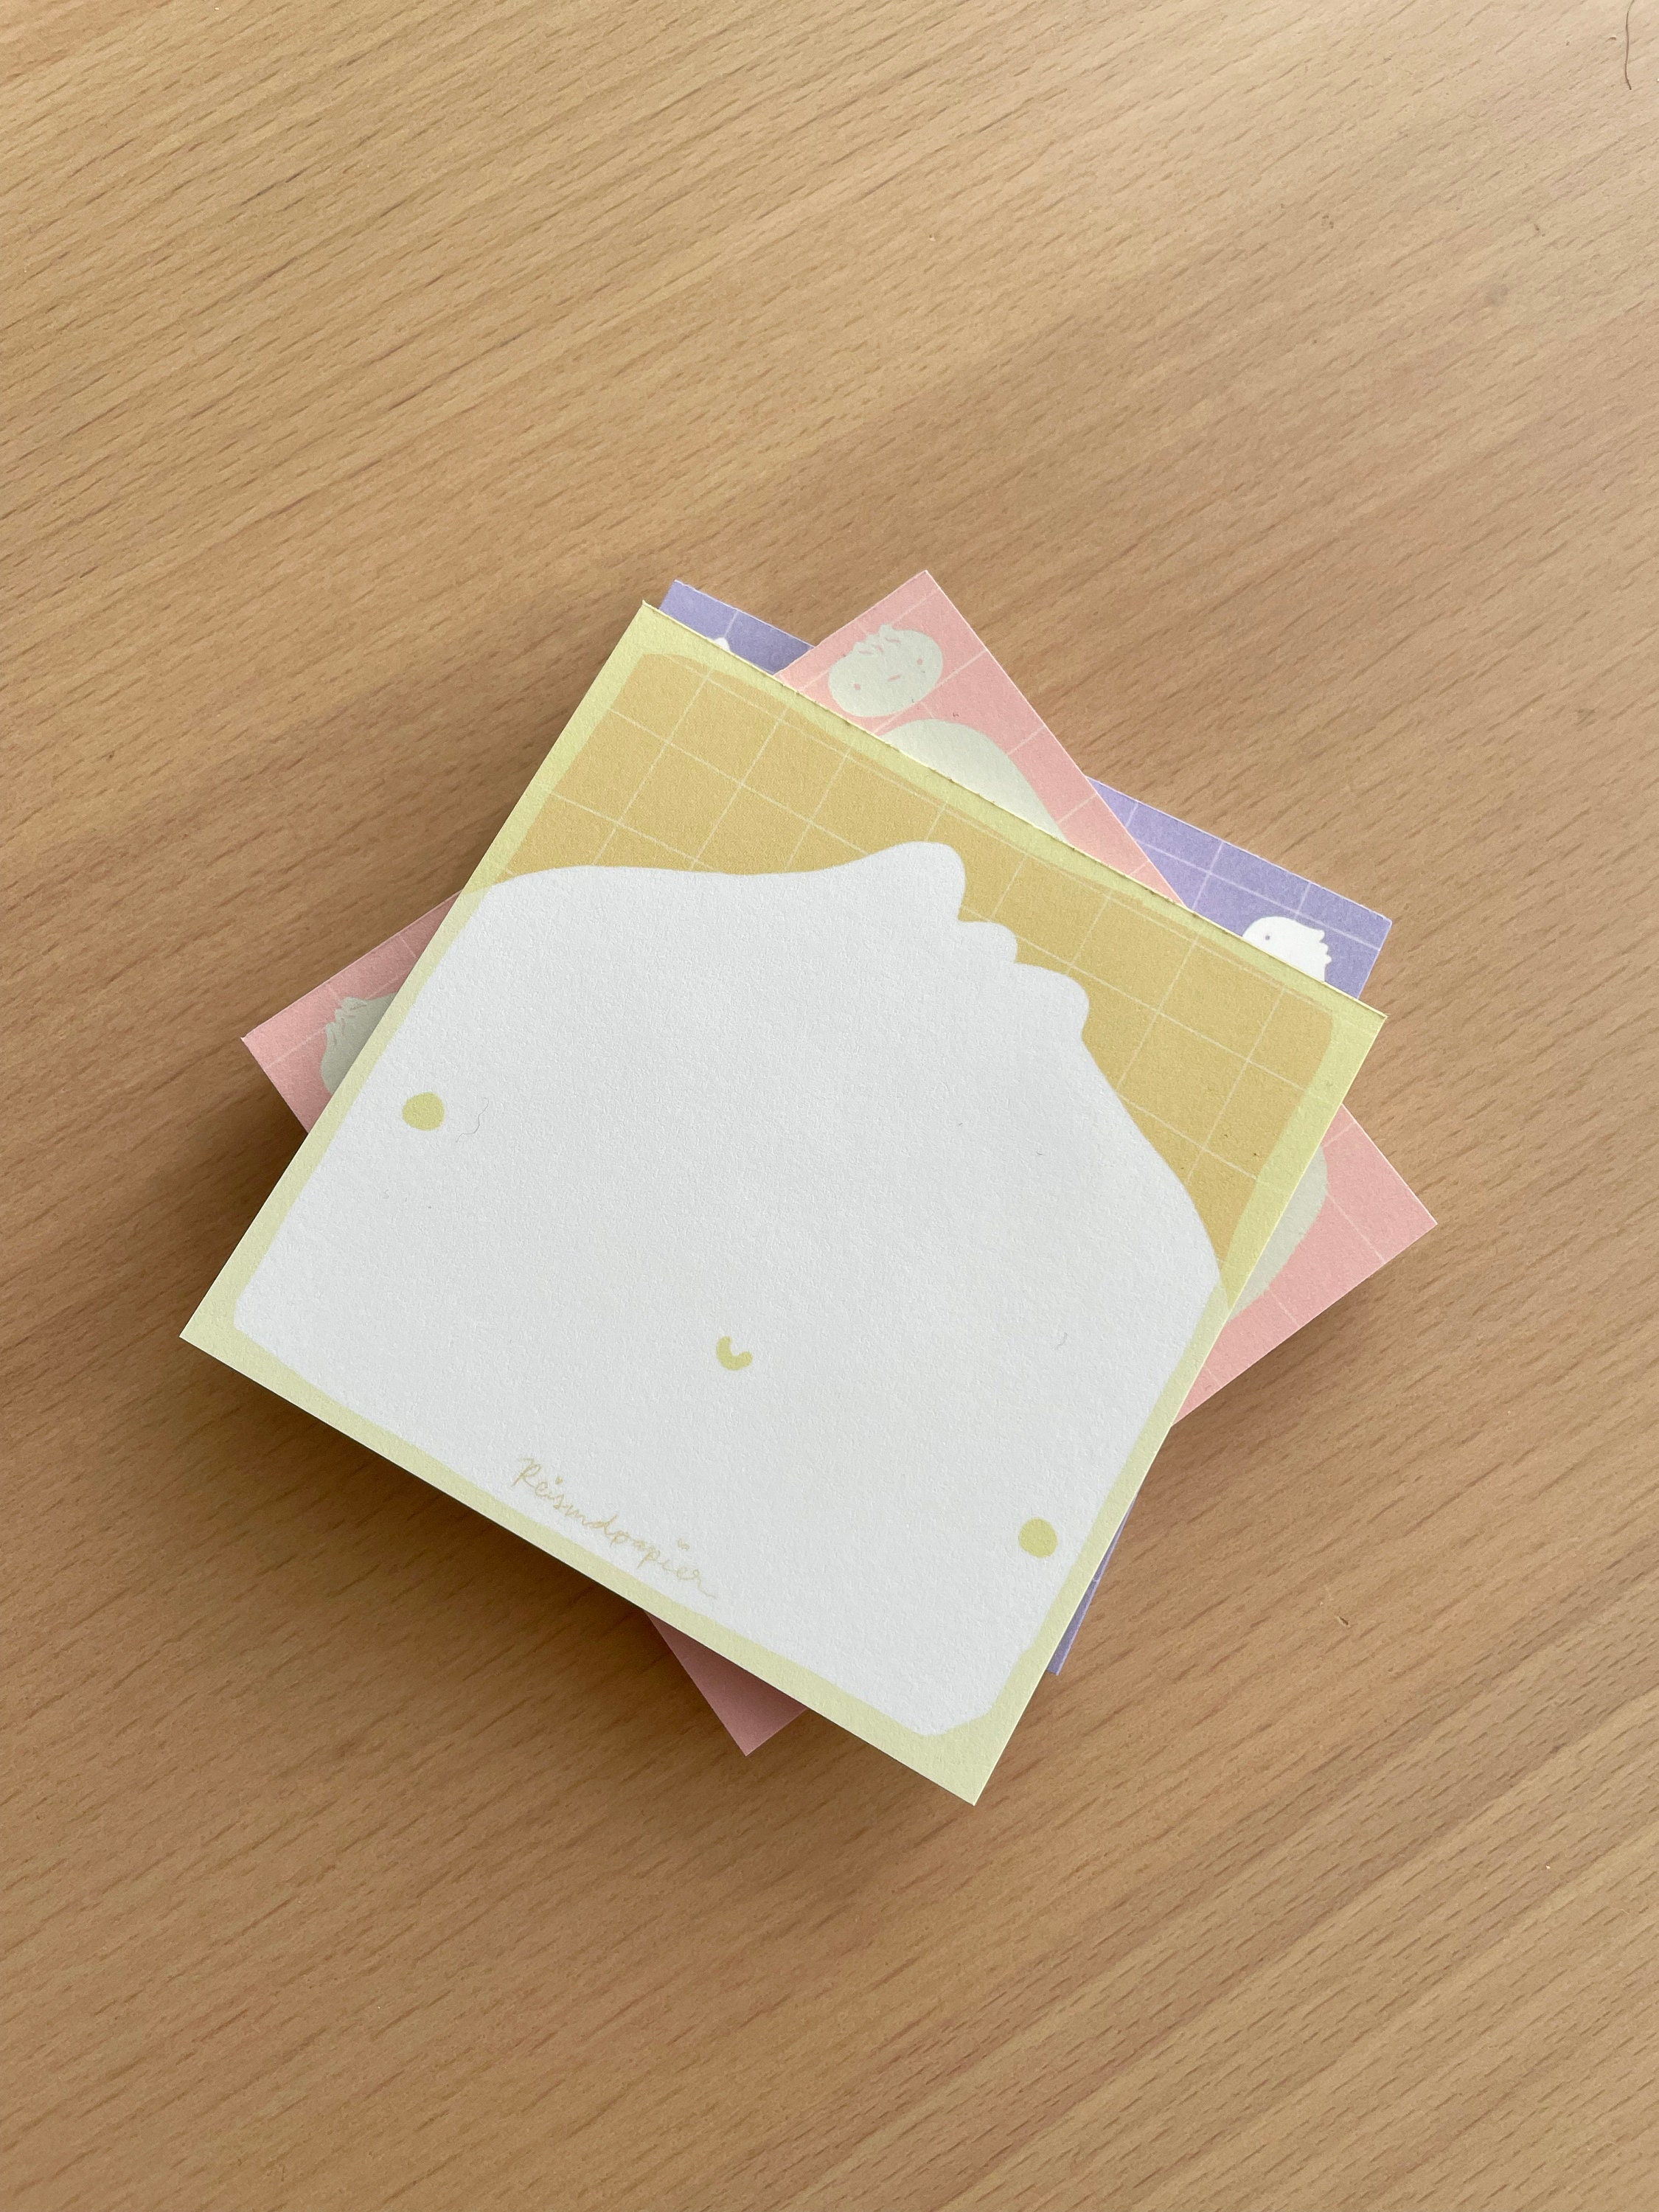  Boao 80 Pieces Sticker Collecting Paper Album Reusable